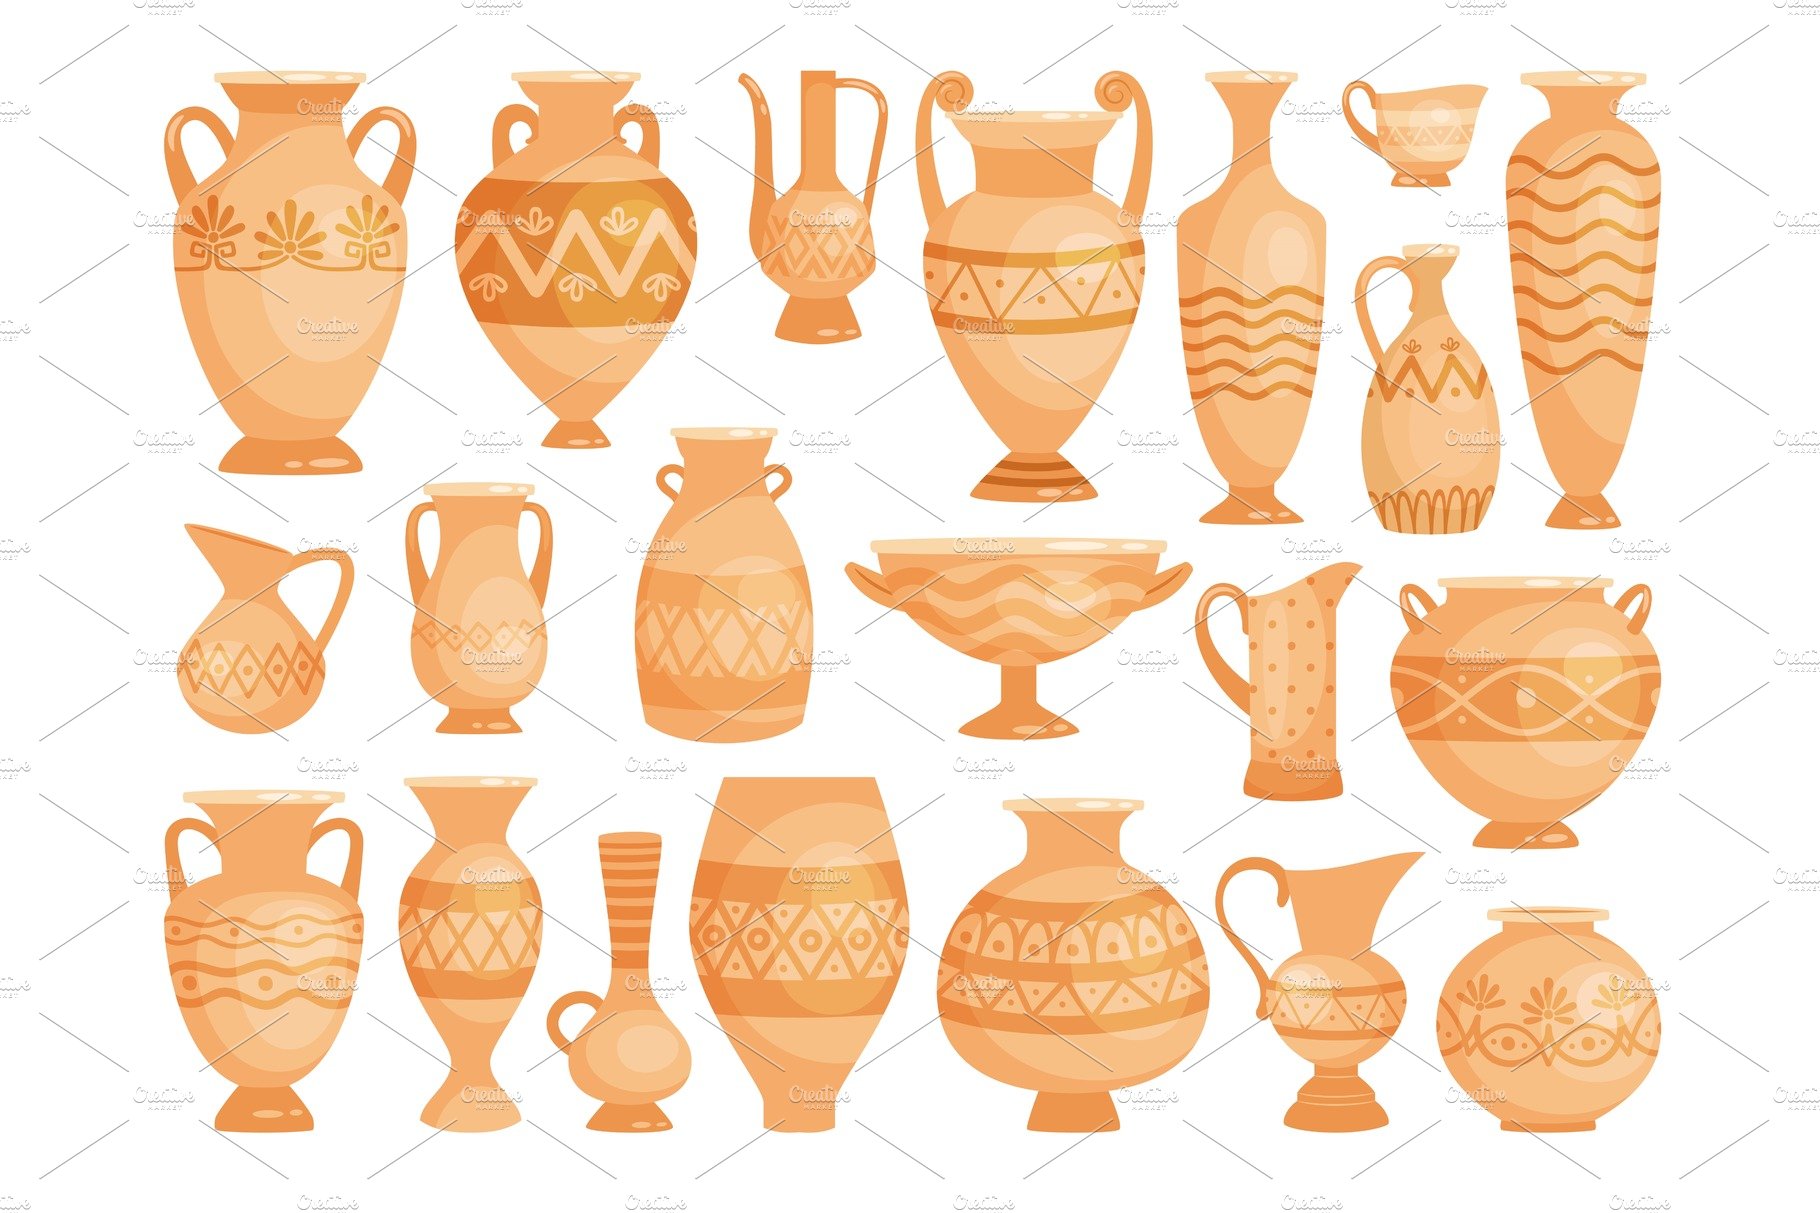 Greek vases. Ancient decorative pots cover image.